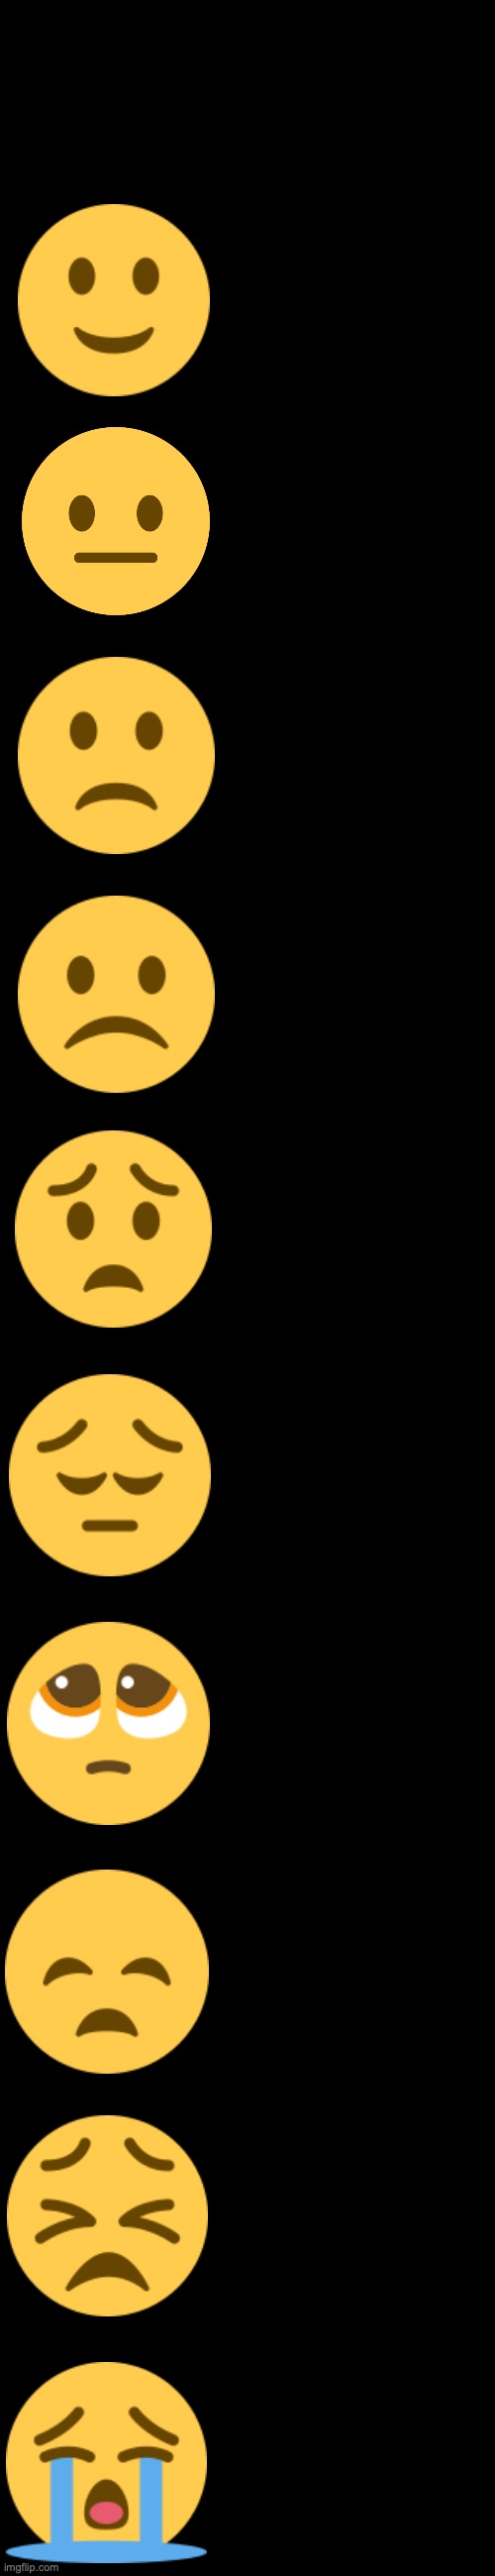 Emoji Becoming Sad Blank Meme Template